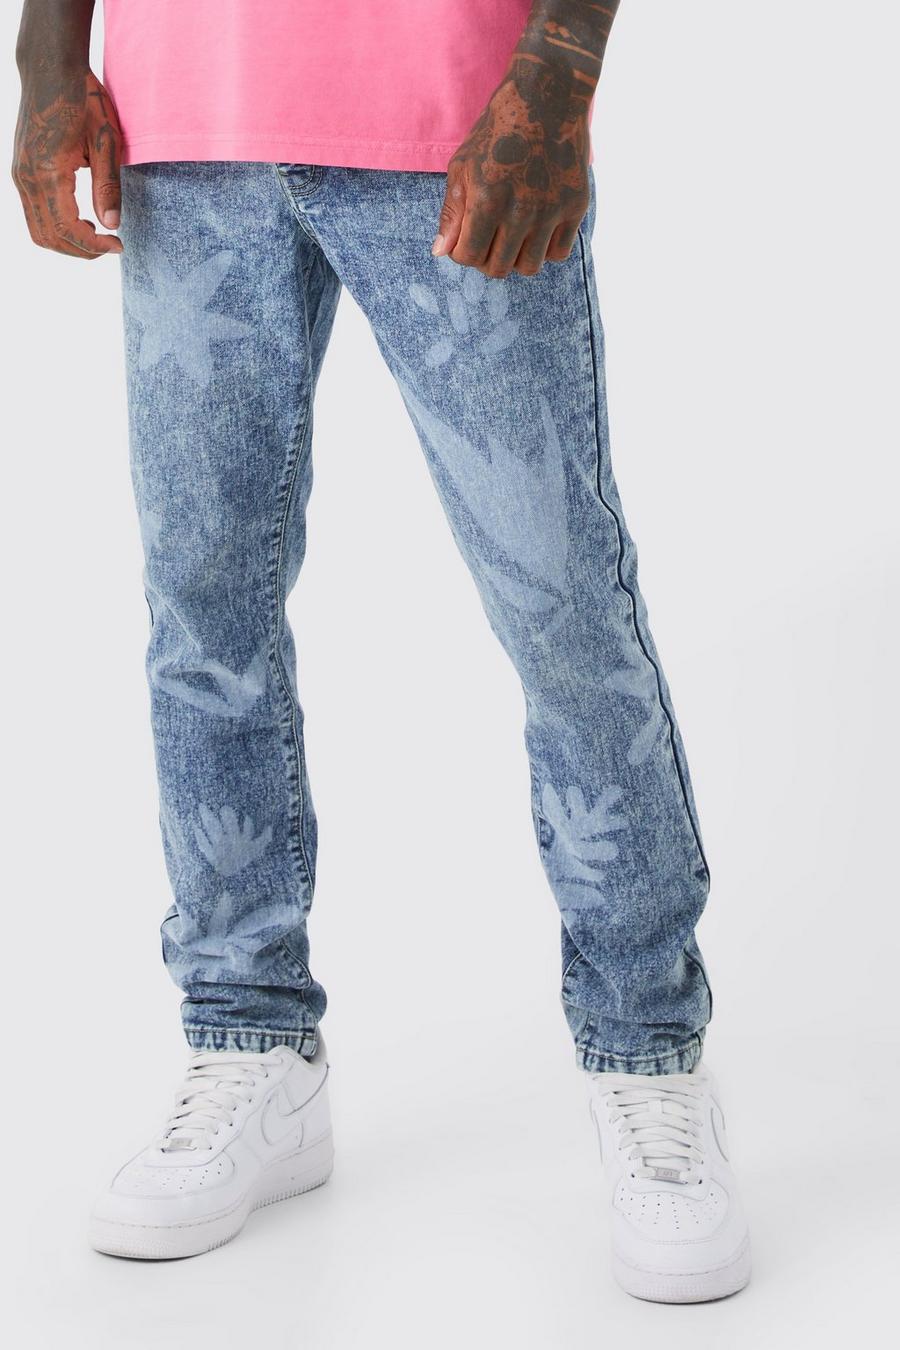 Jeans Slim Fit con stampa al laser, Antique wash